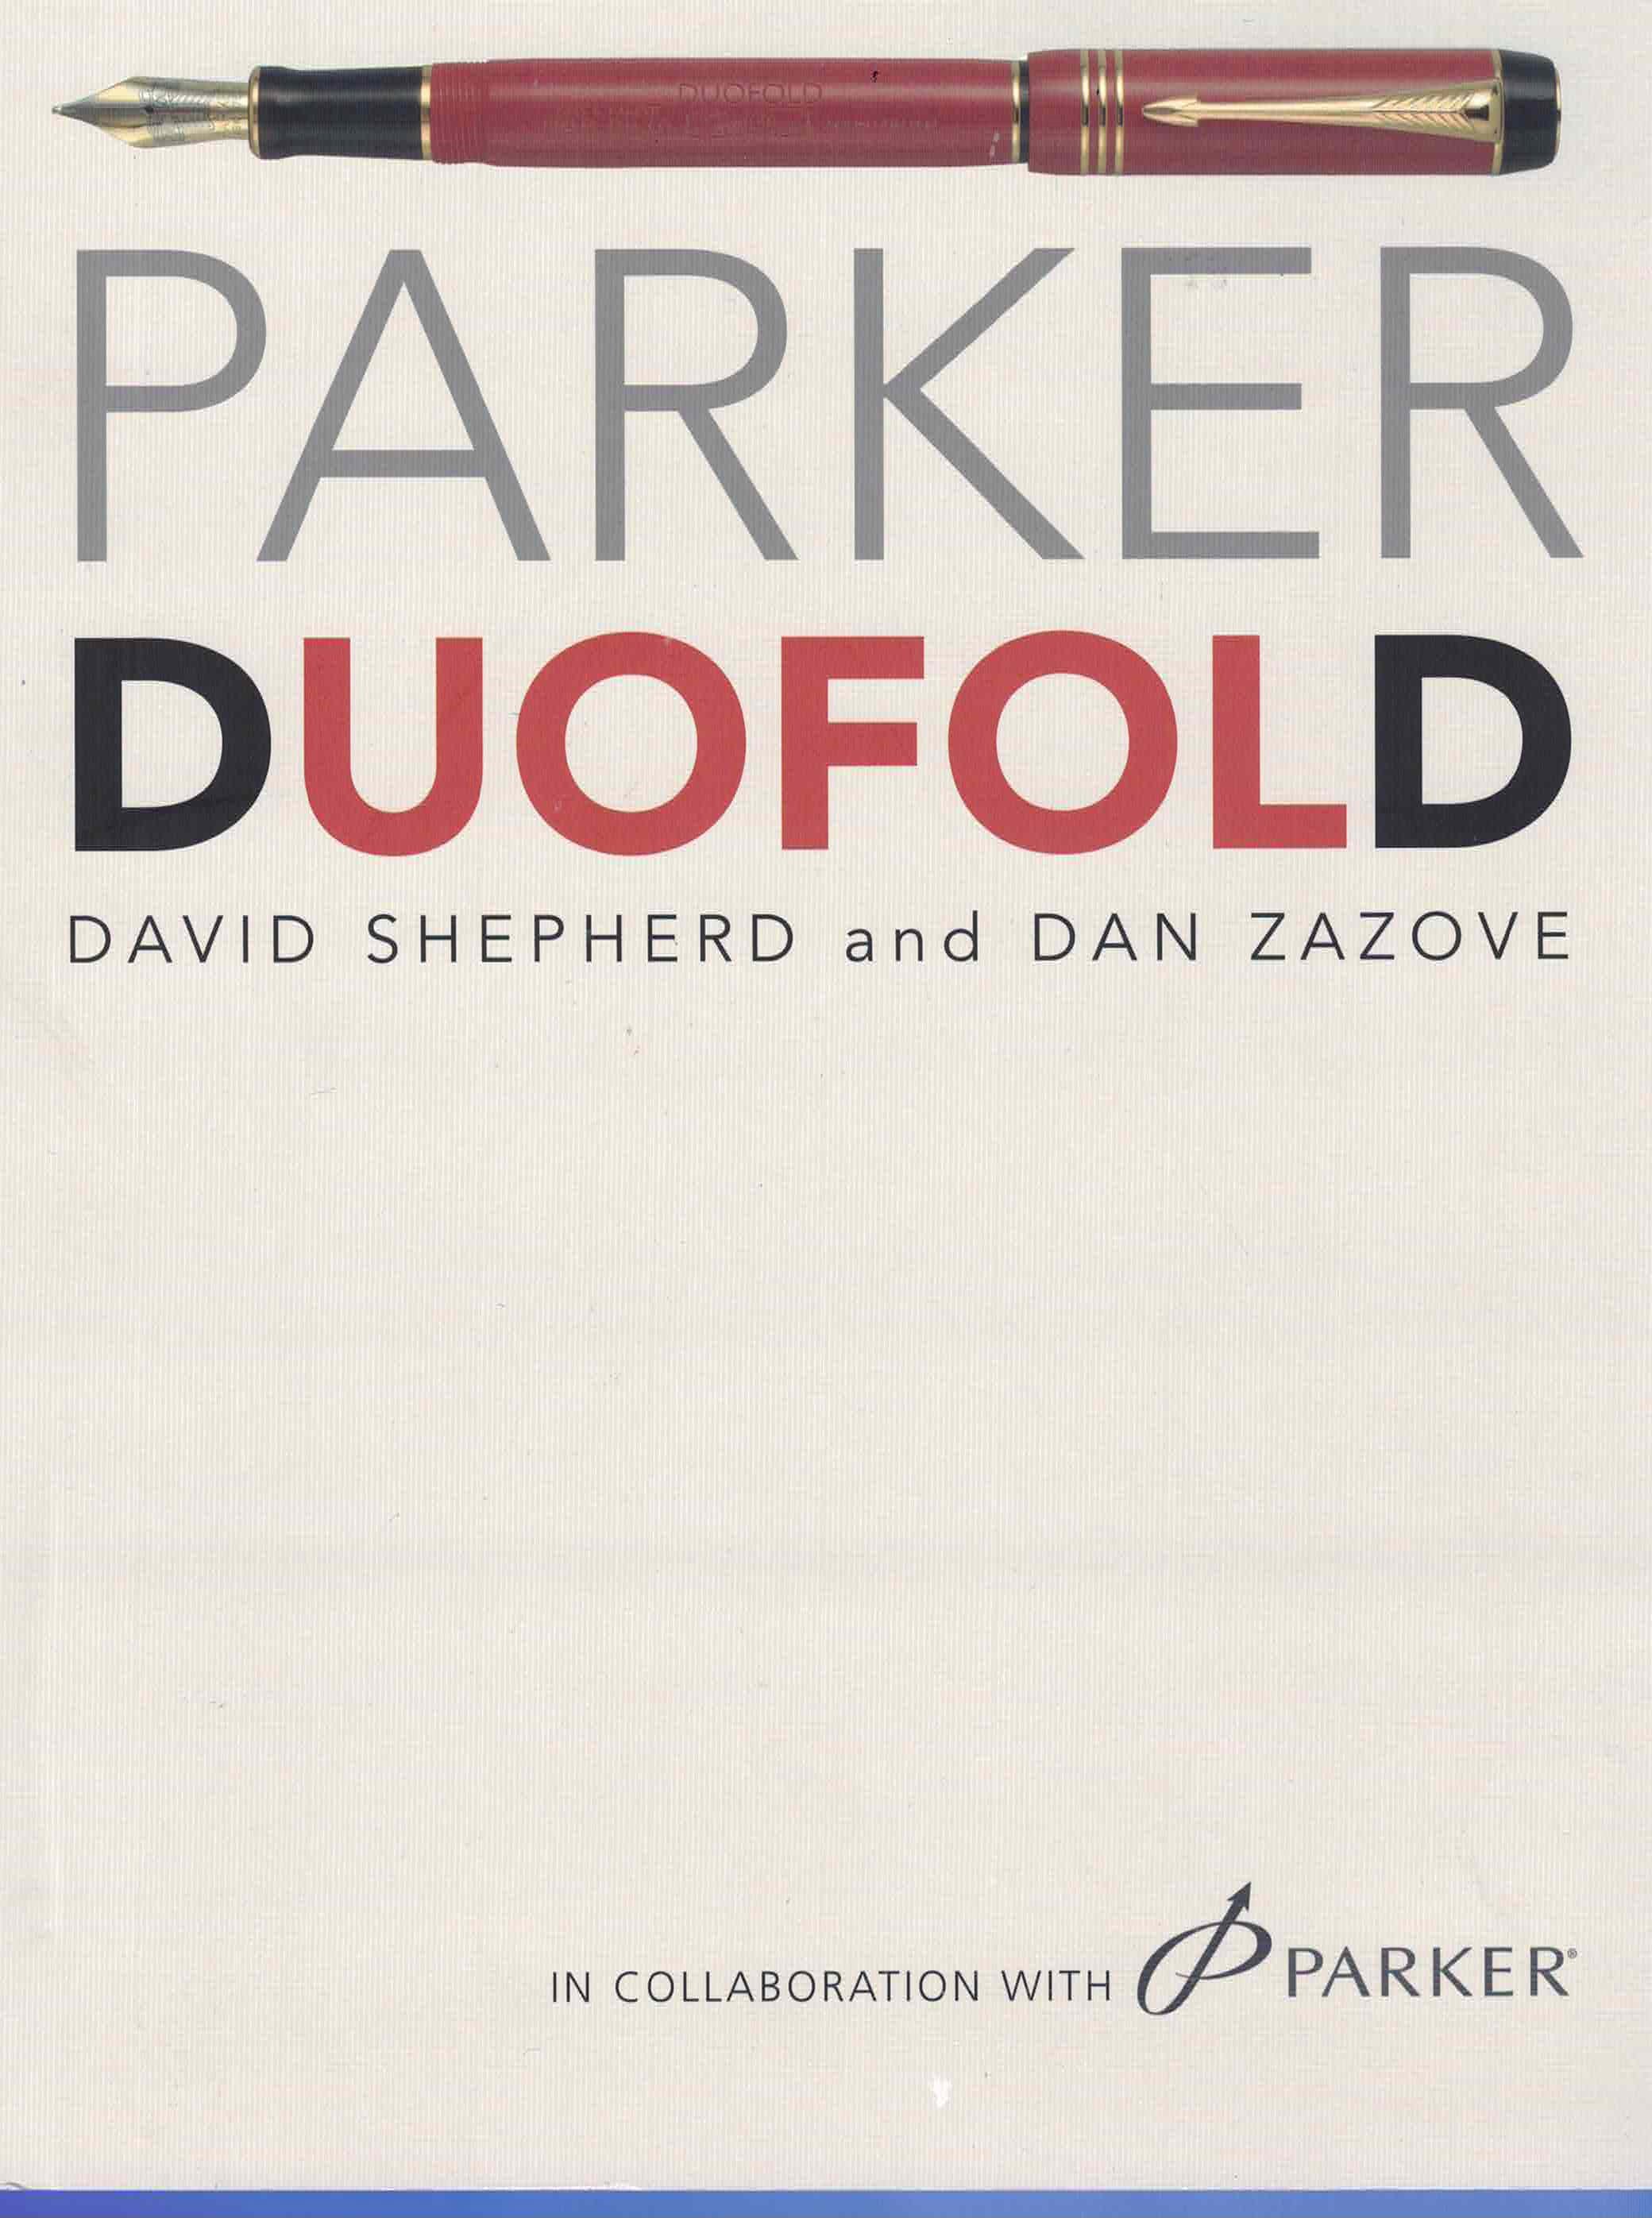 Parker Duofold Reference Book (David Shepherd and Dan Zazove, 2006